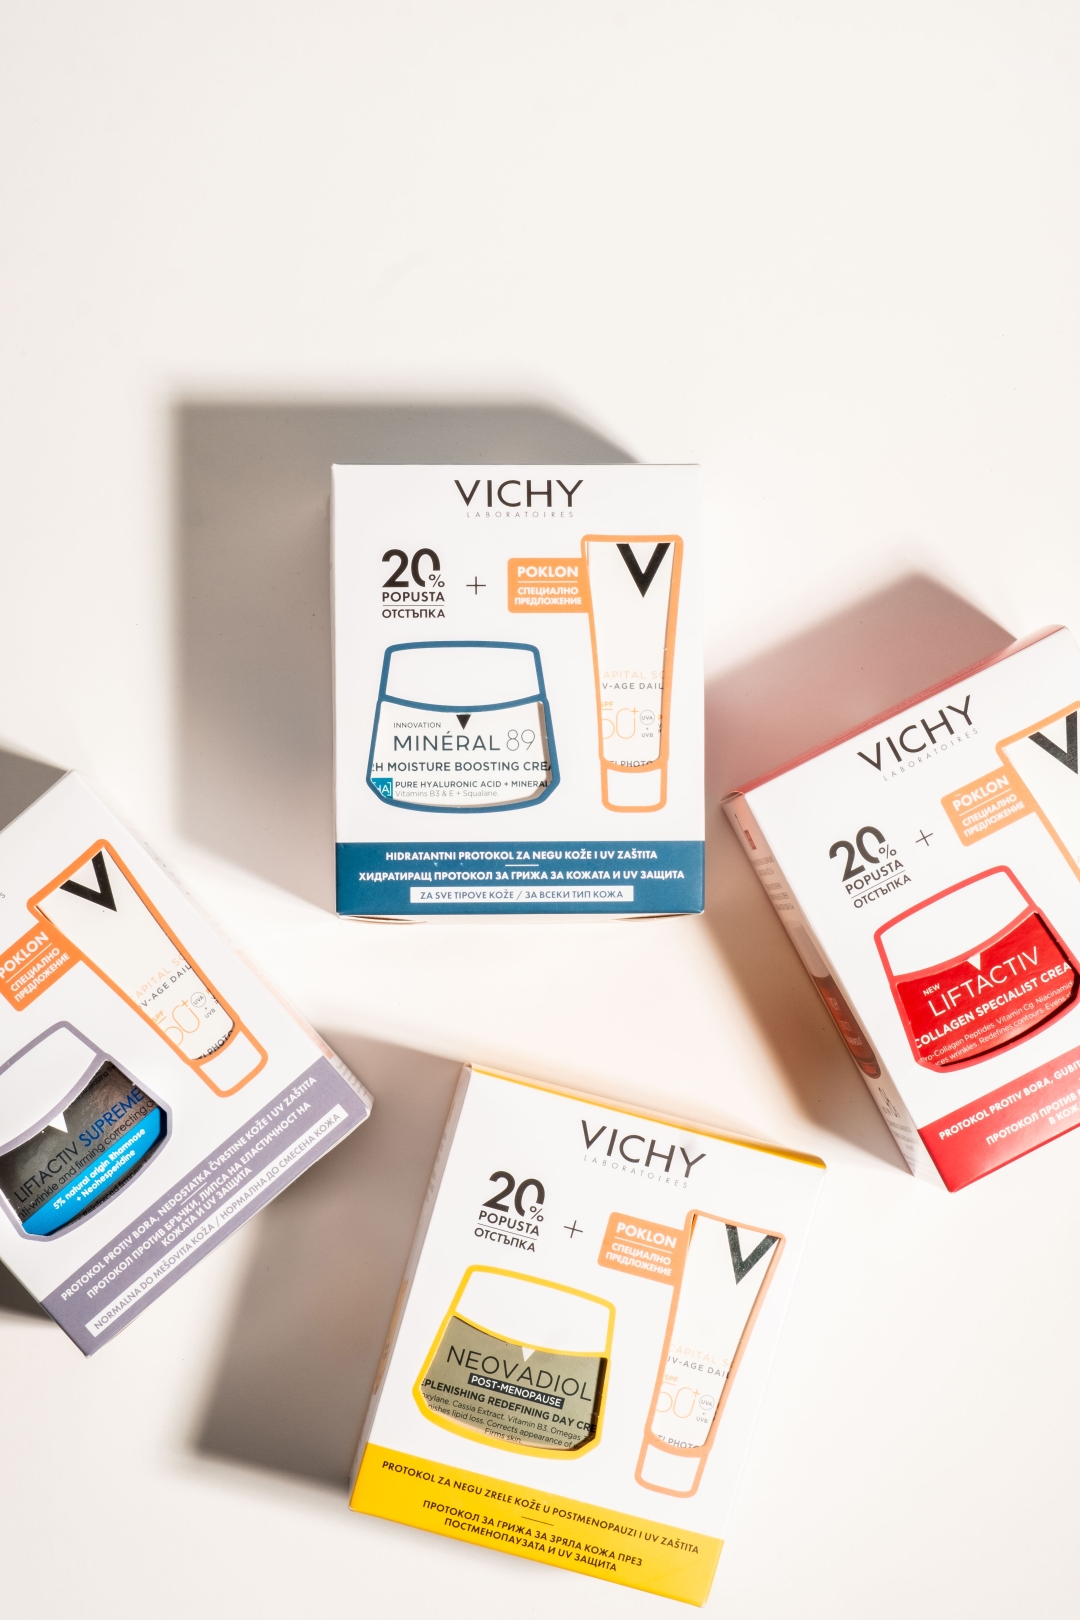 Vichy: Ove praznične sezone, negovana koža je najdragoceniji poklon